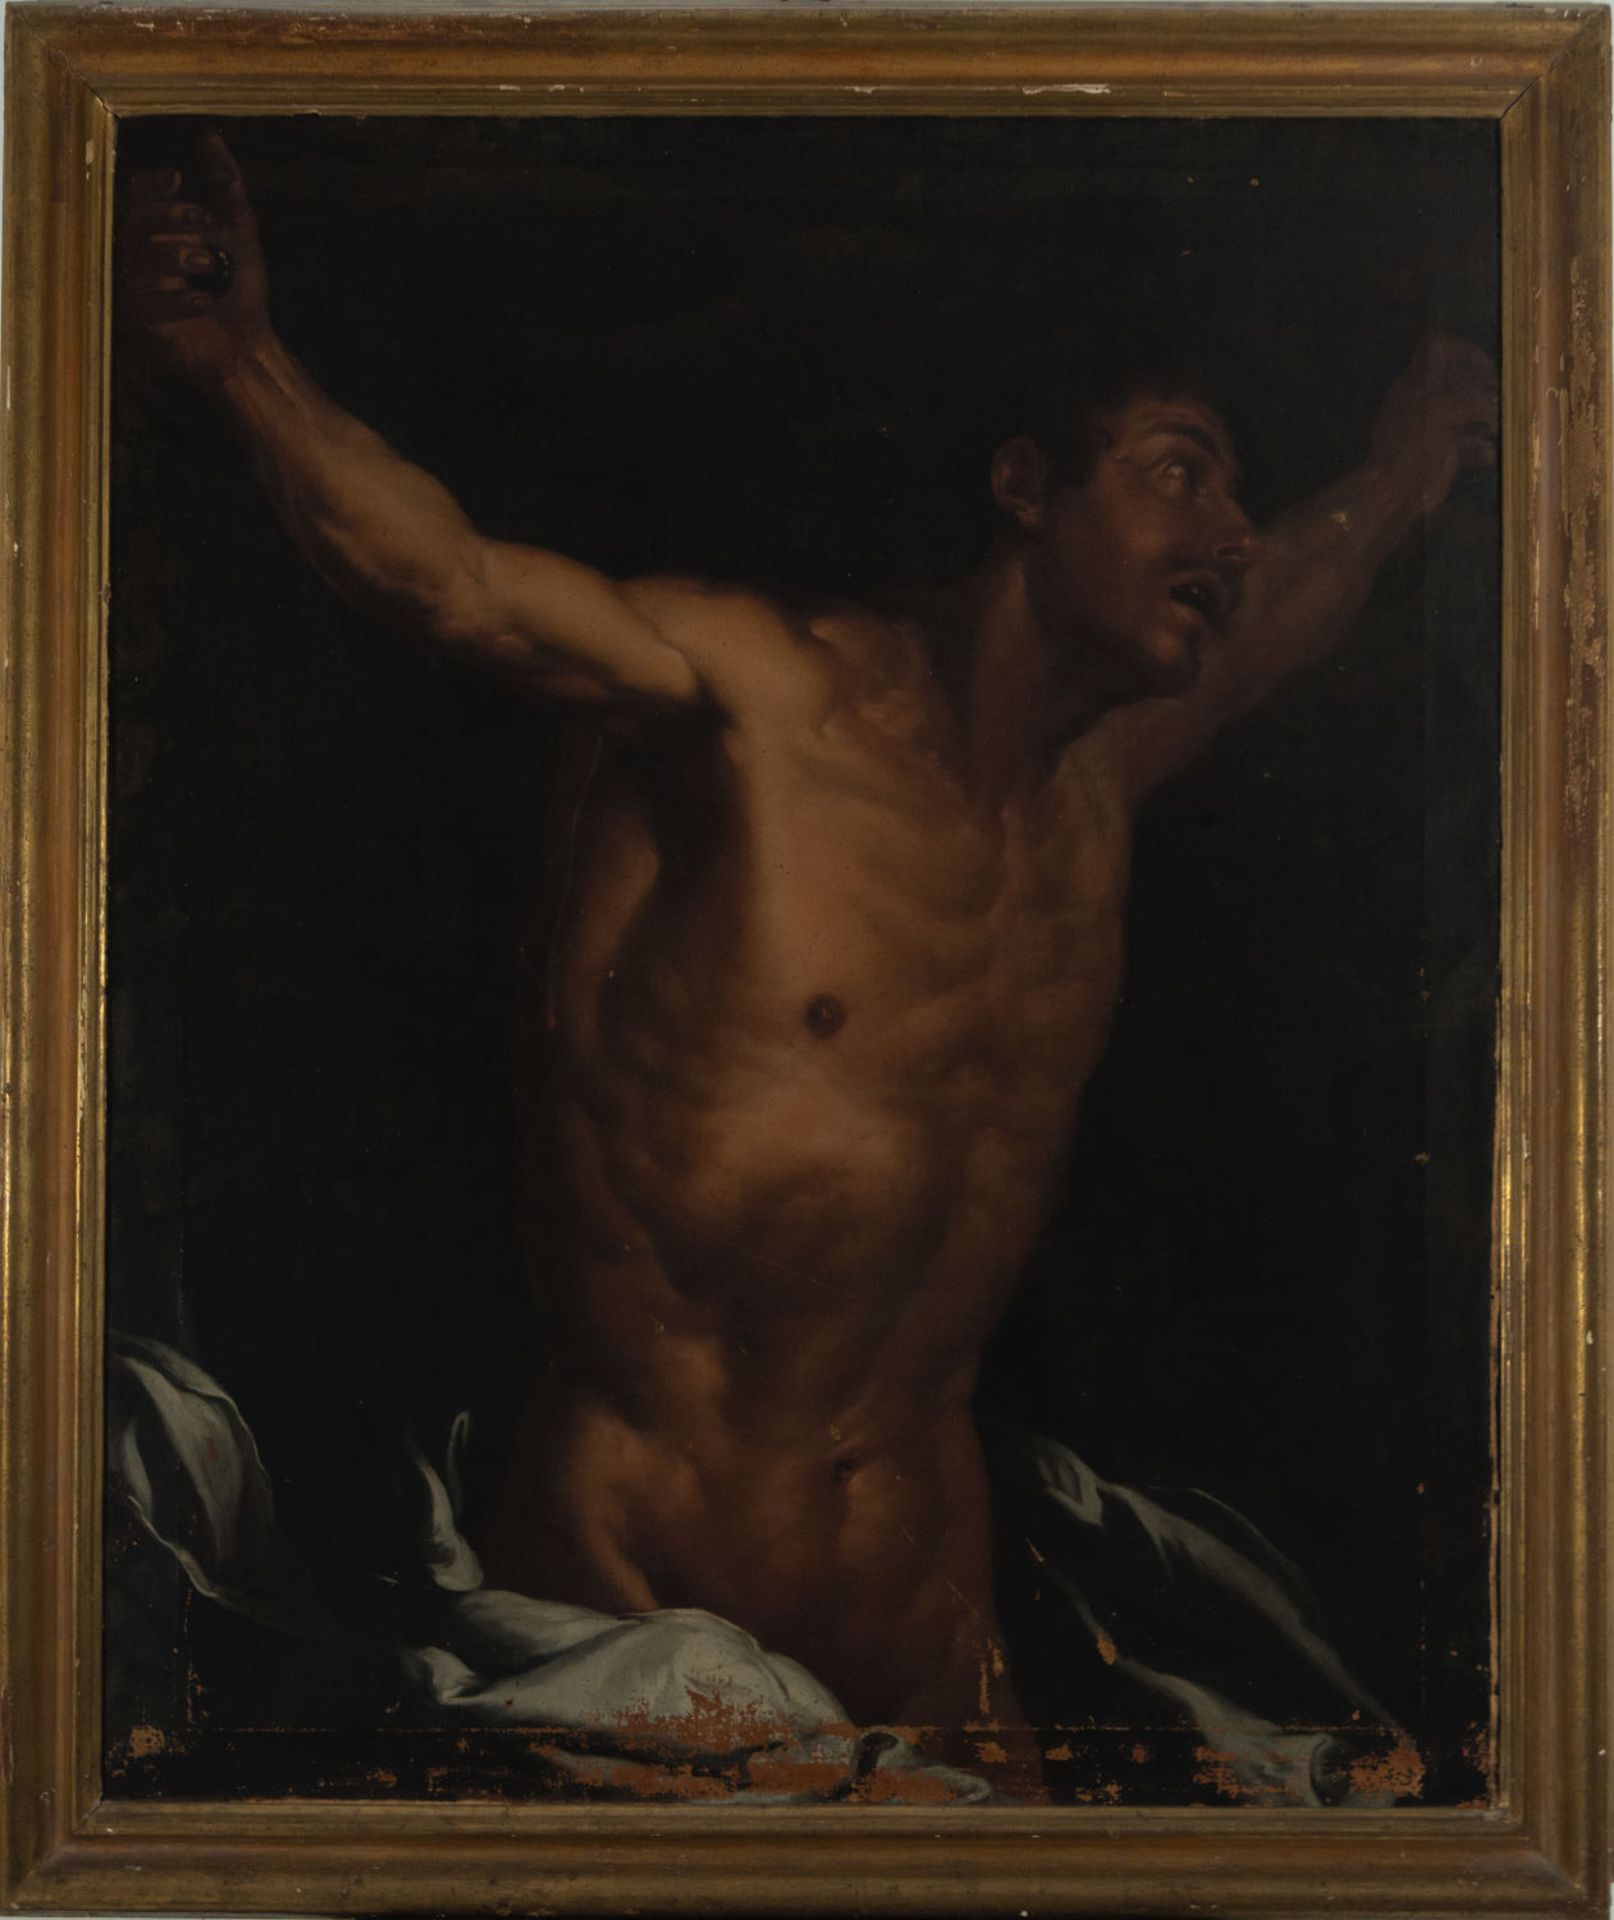 Attributed to Francisco Ribalta (Solsona, Lérida, 1565-Valencia, 1628) - San Dimas